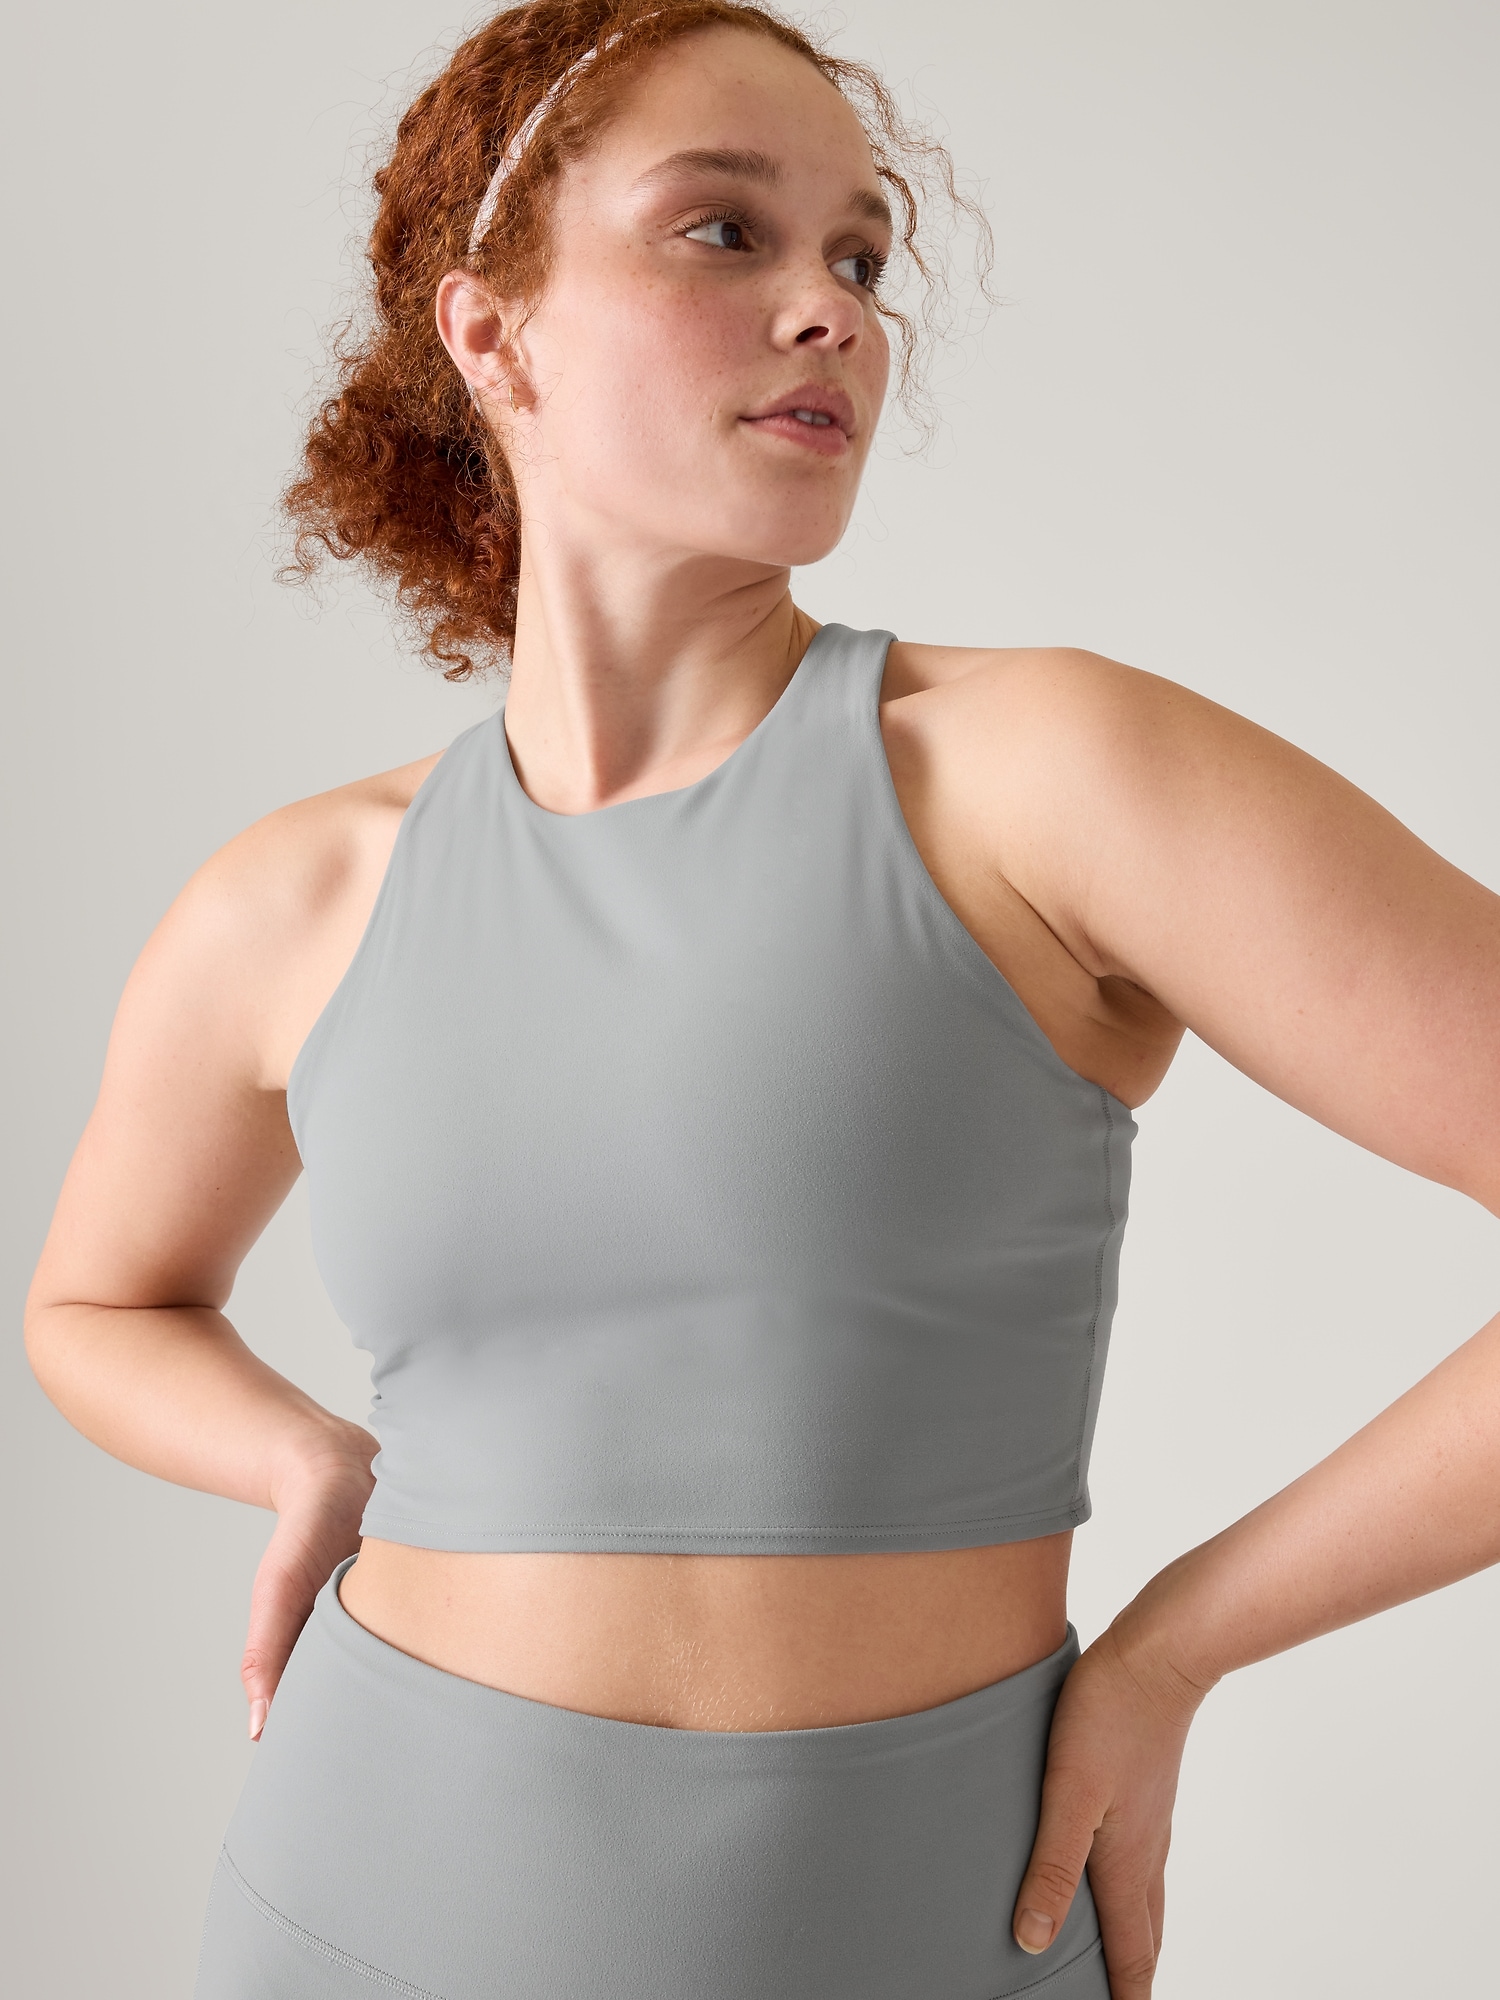 Gap Body T-Shirt Bra Solid Bras & Bra Sets for Women for sale